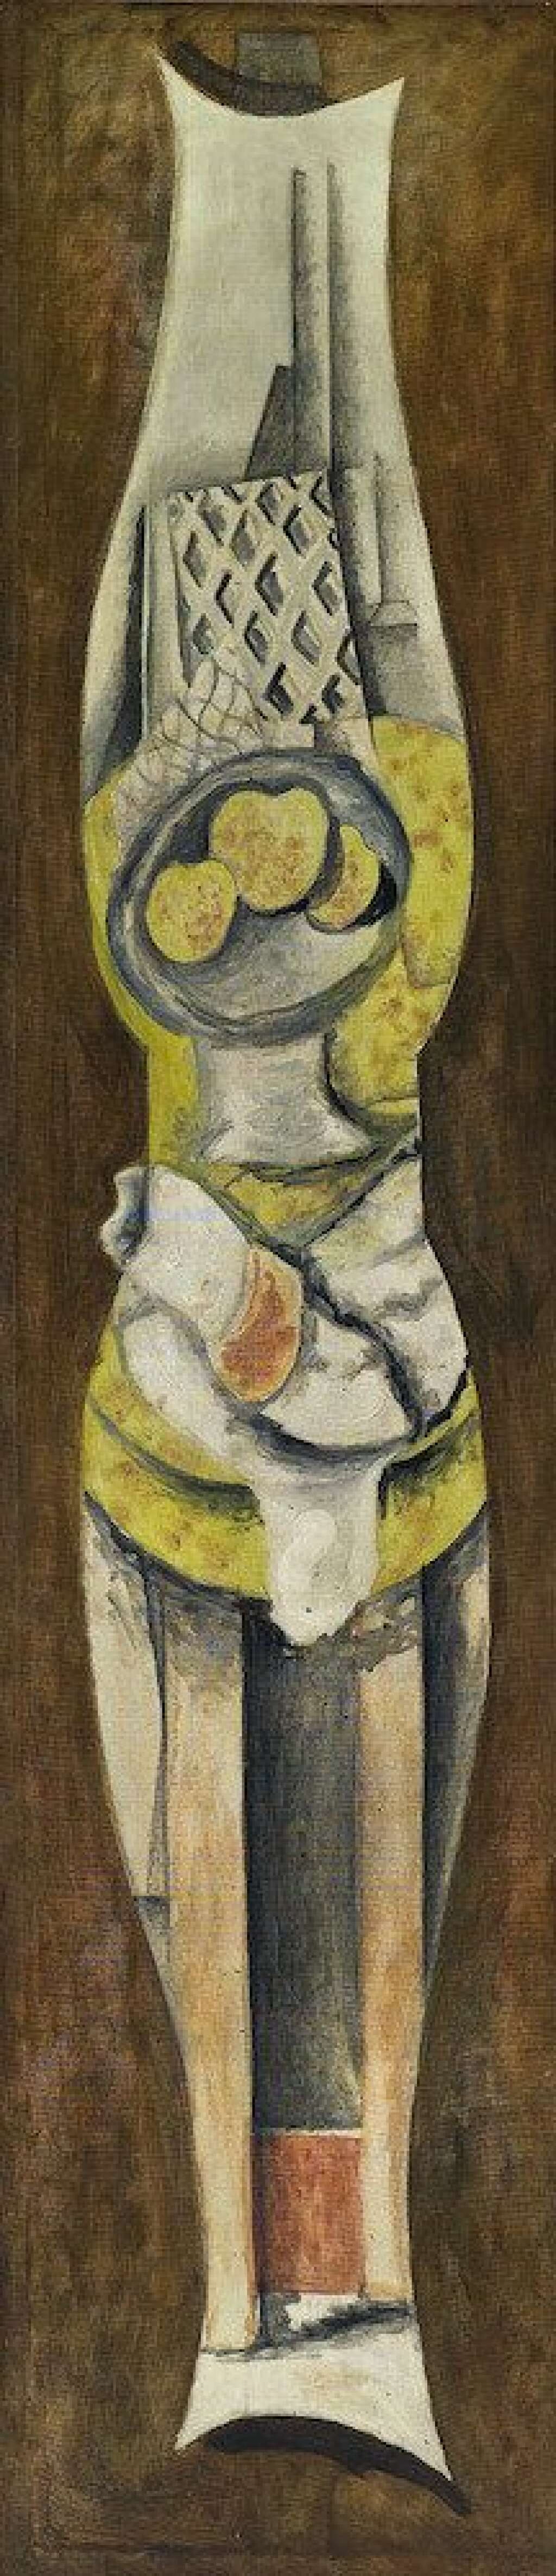 Georges Braque, Nature morte au compotier, 1926-1927 - © Adagp, Paris 2013